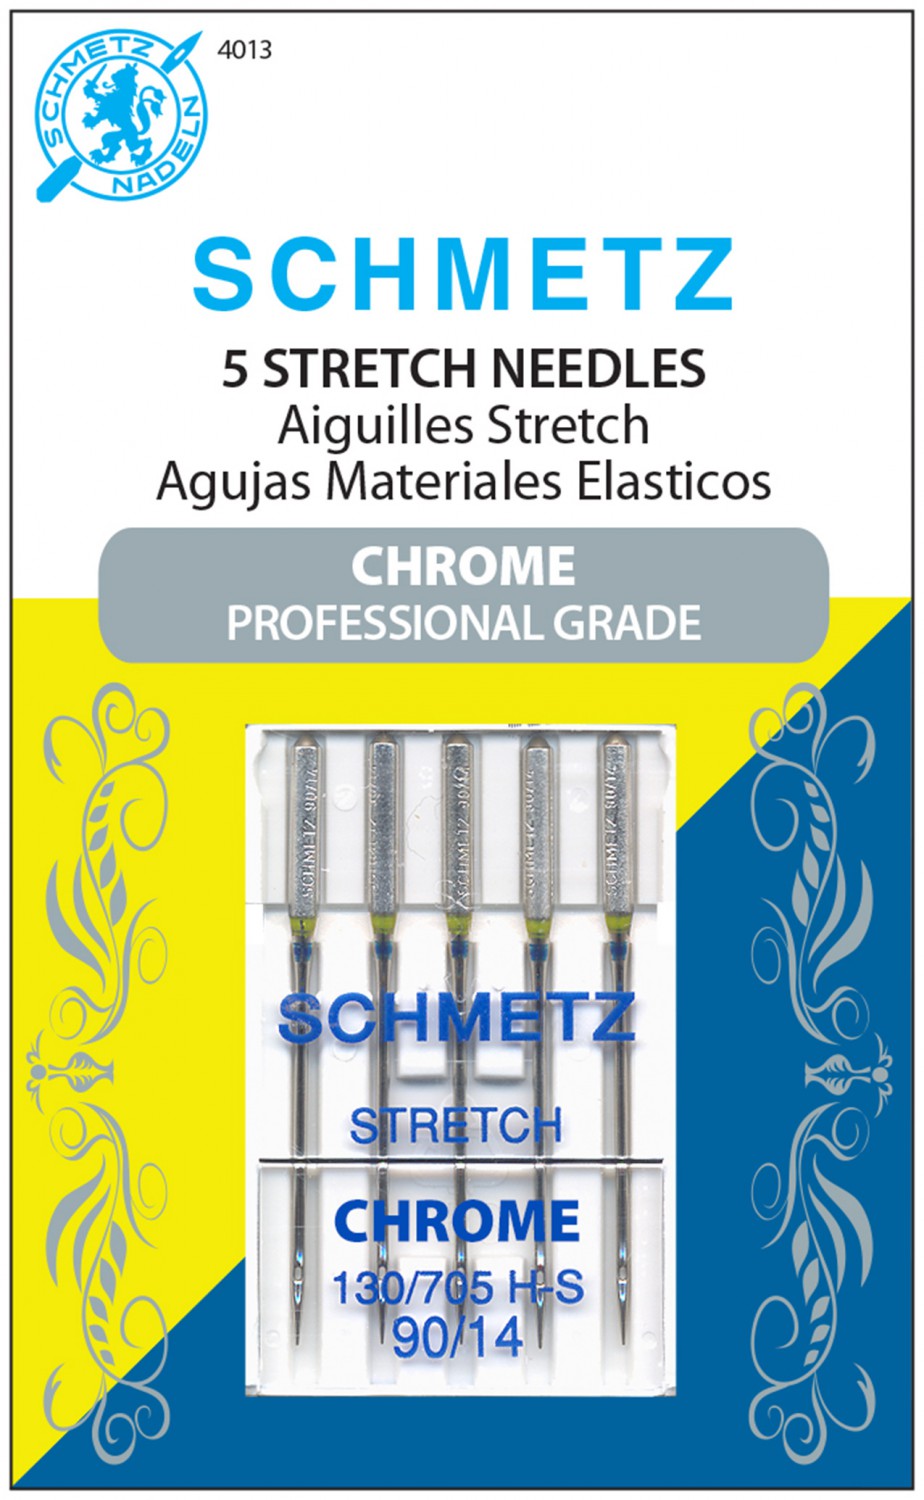 Schmetz Chrome Stretch Needles 90/14 5 Needles for Stretchy Fabrics & Elastic